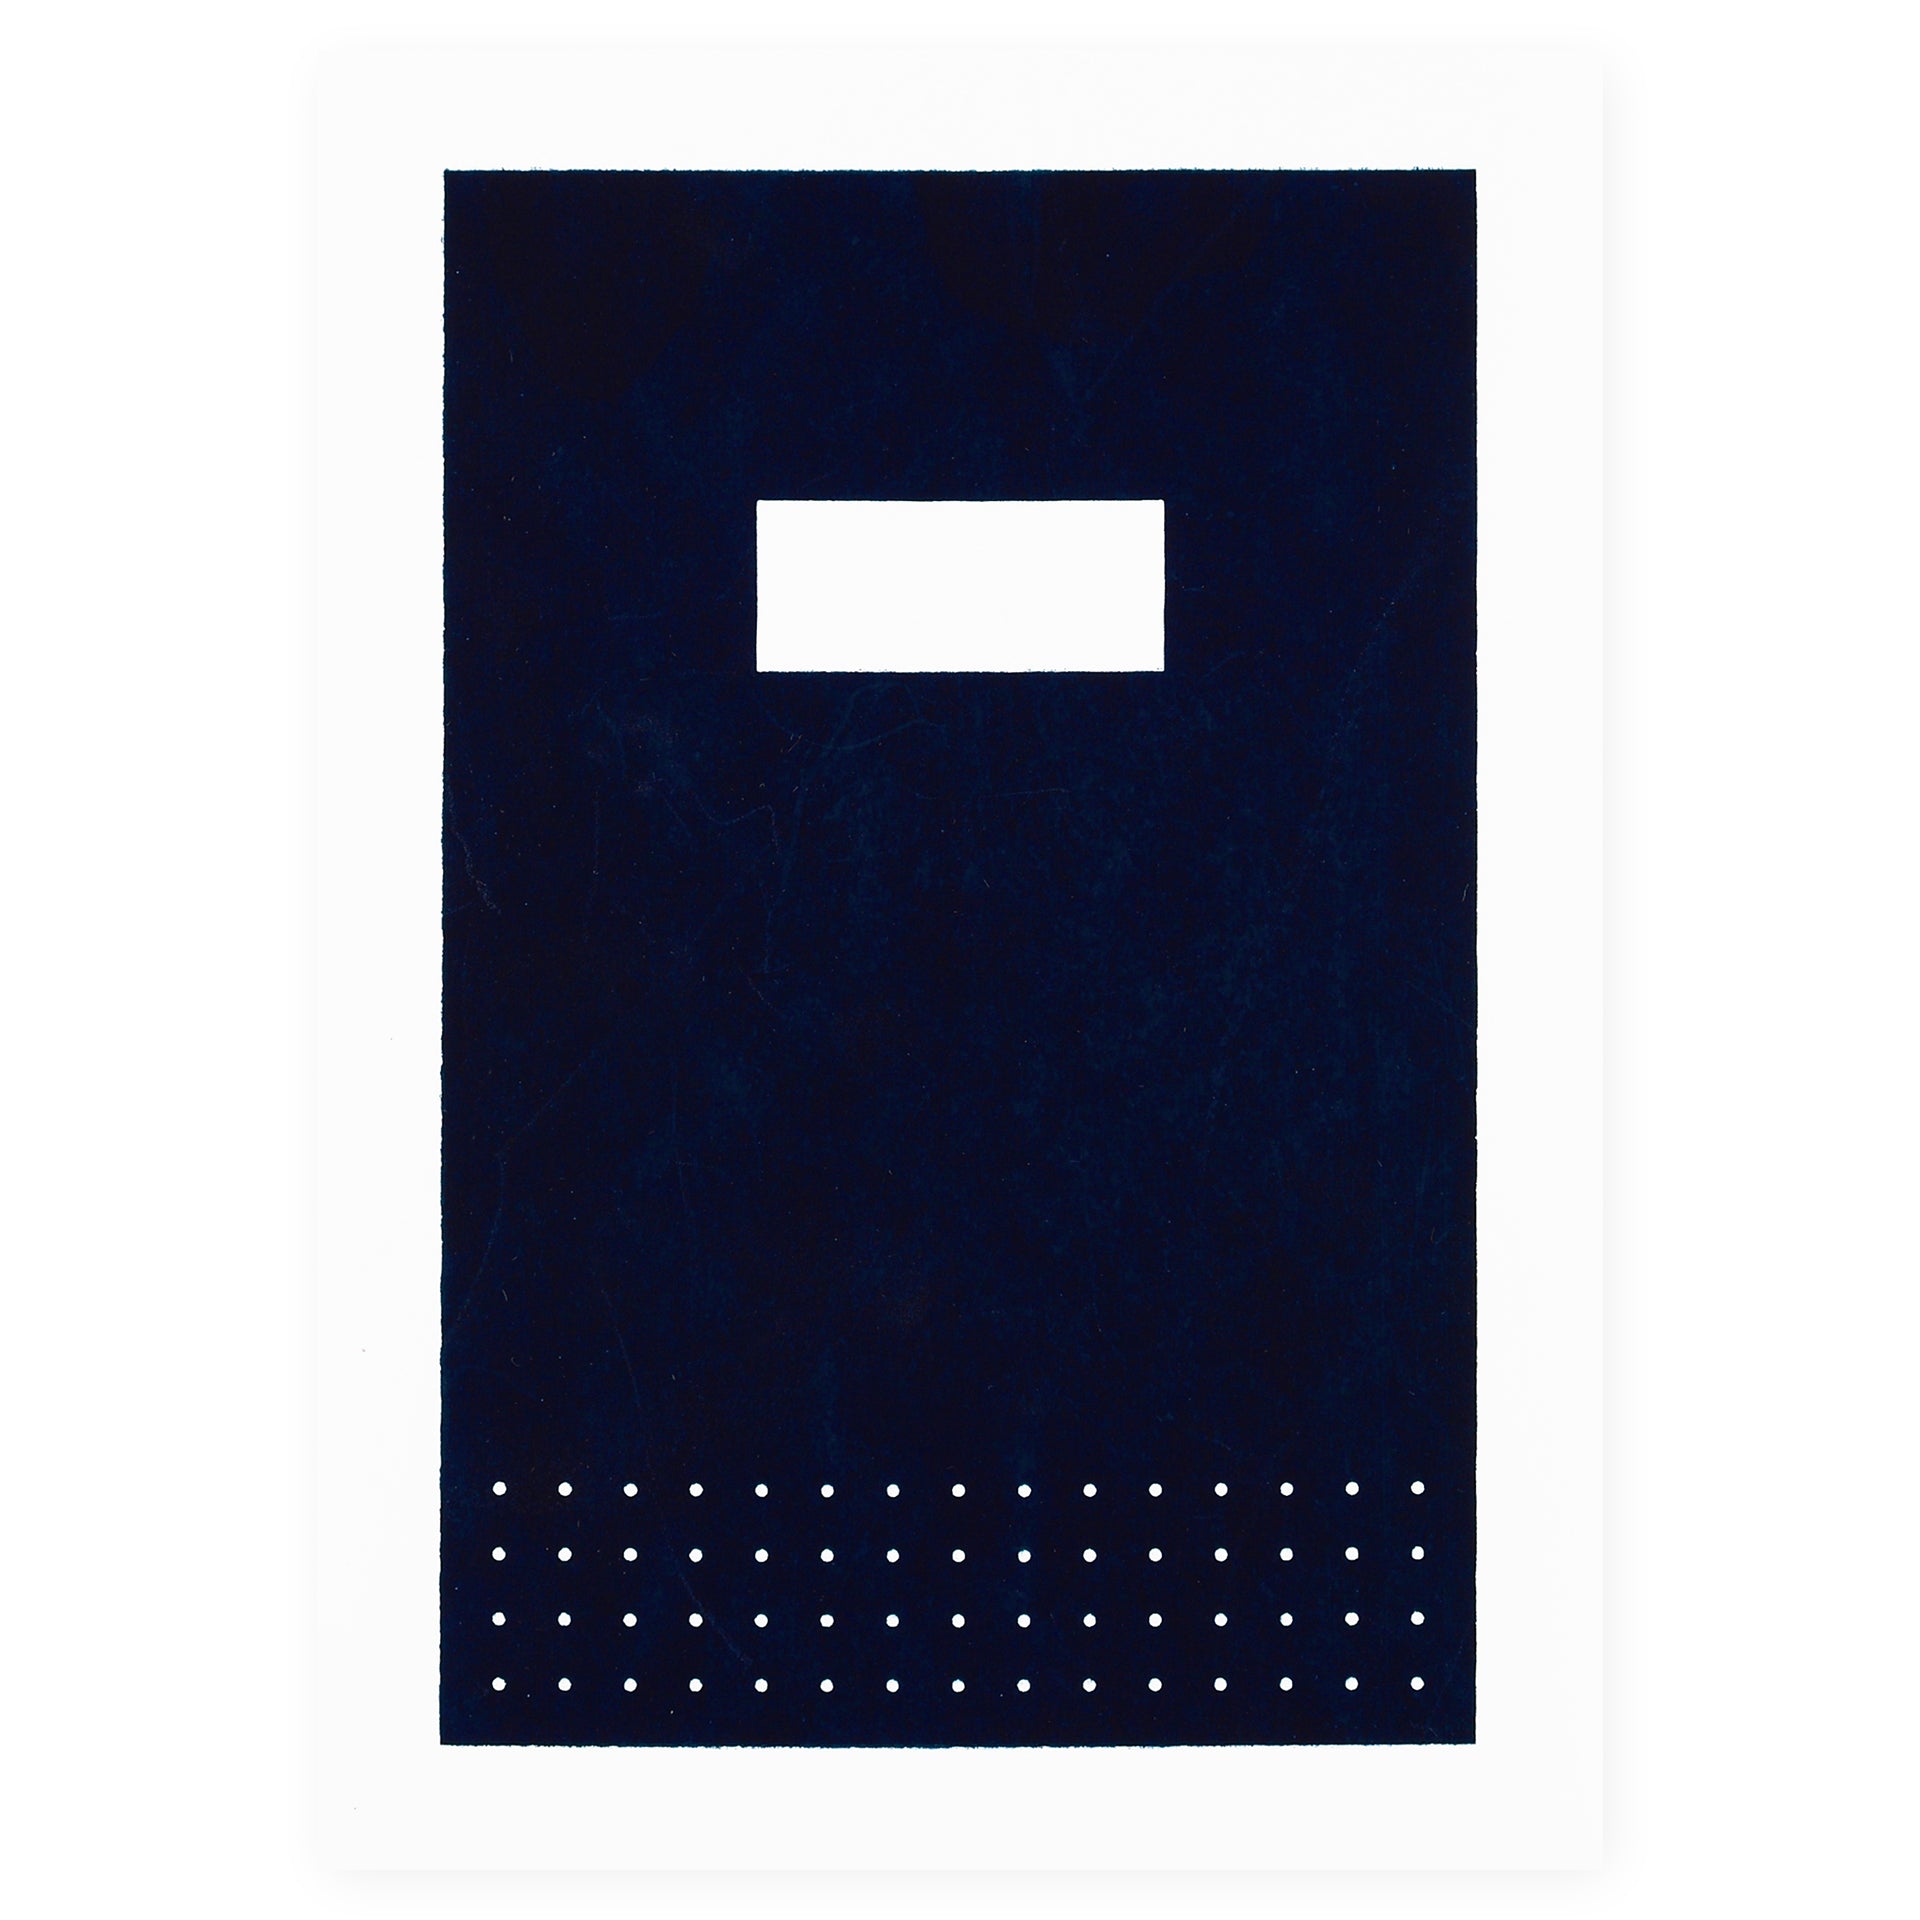 Hanaduri Hanaduri Hanji Dot Grid Notebook Cabinet A5 | 8 Colors Navy